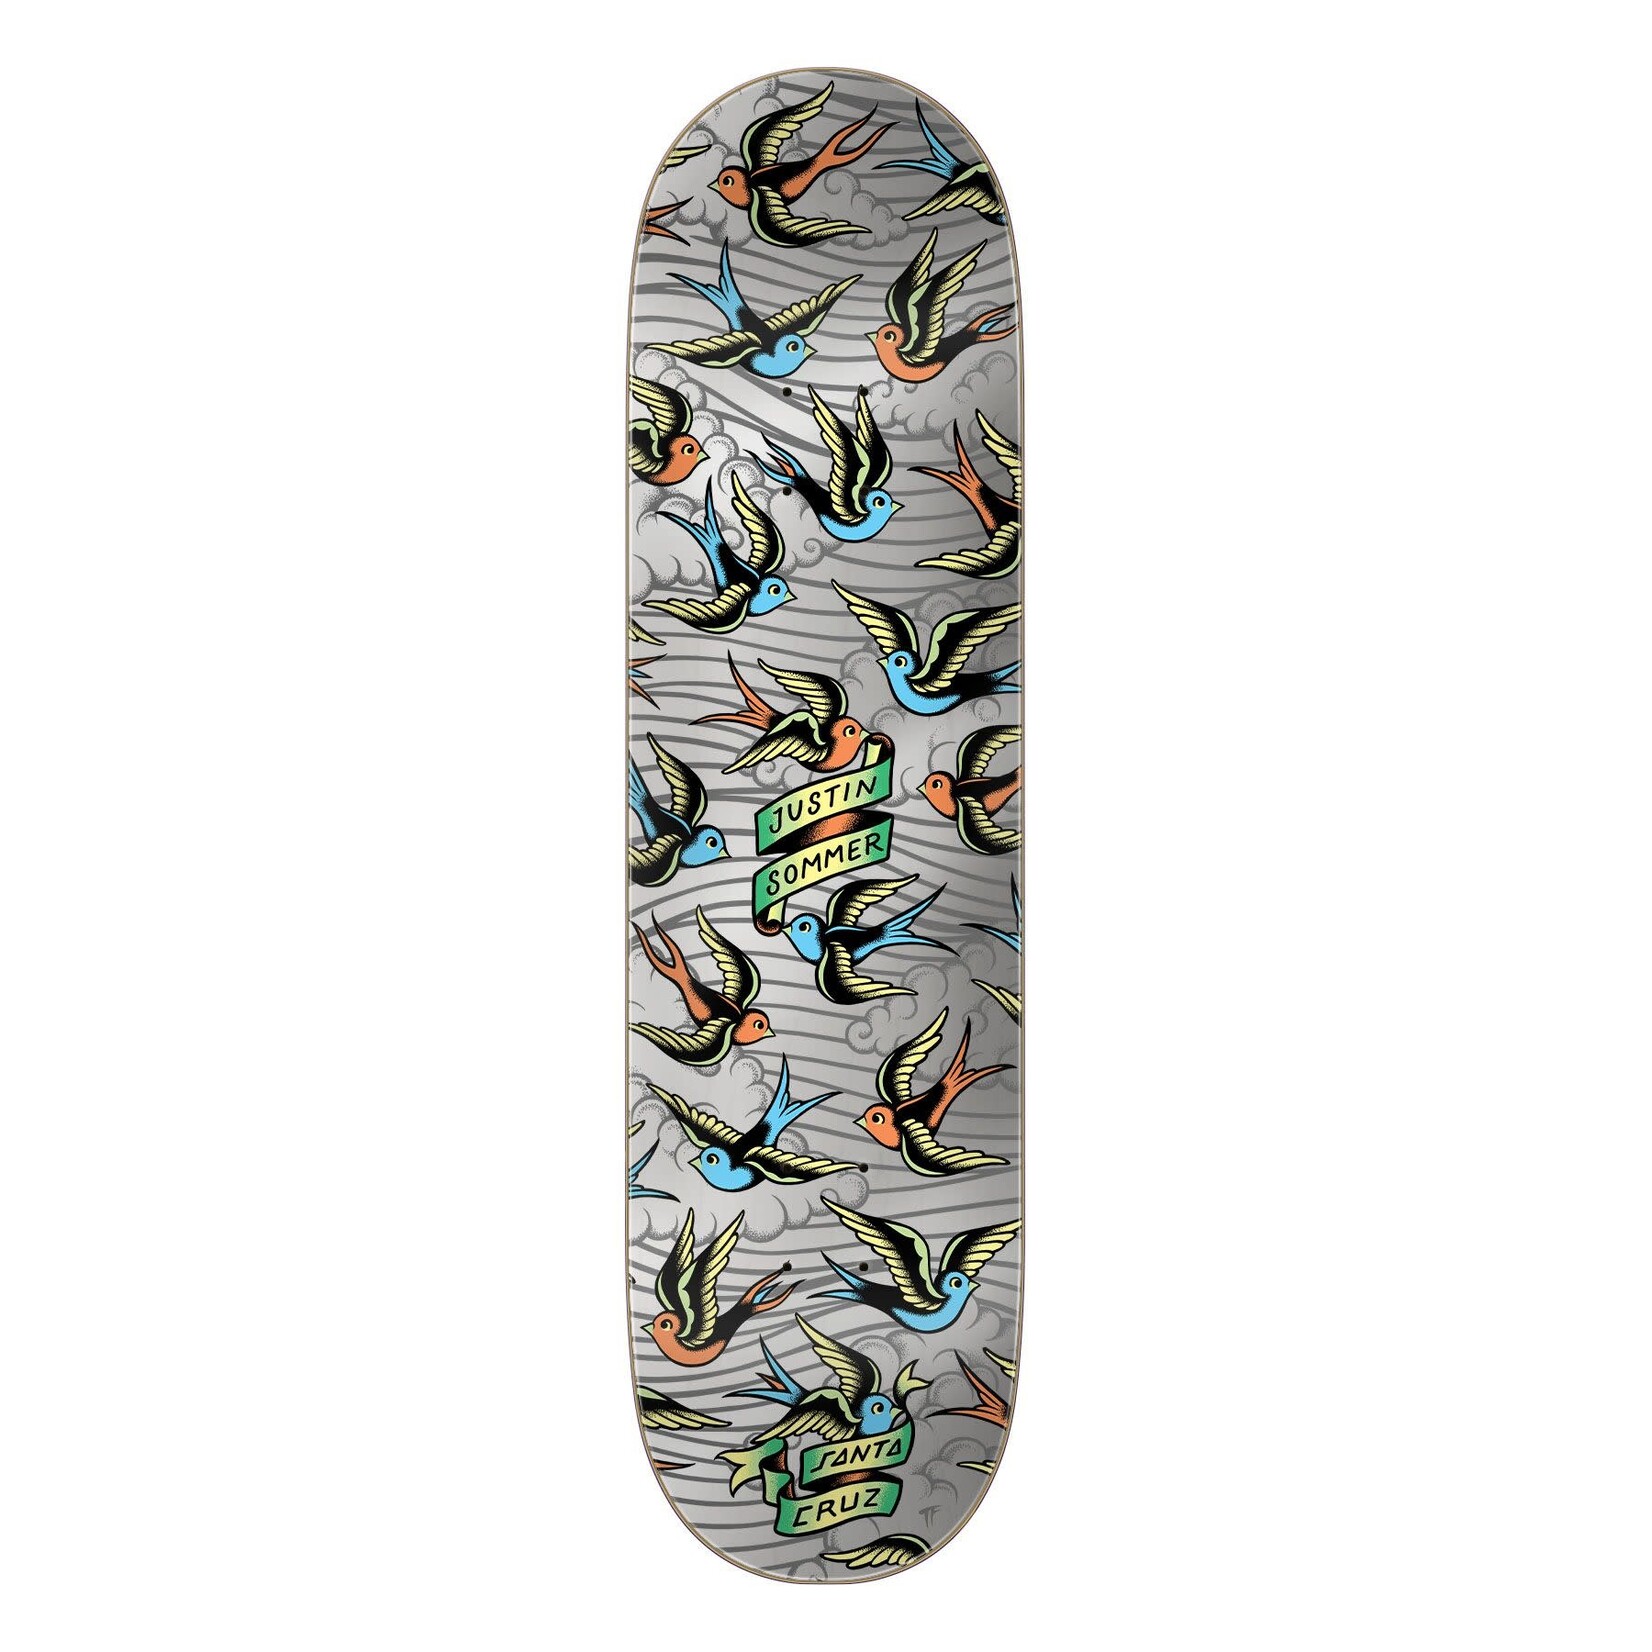 Santa Cruz Skateboards Santa Cruz Sommer Sparrows Deck - 8.25" x 31.8"